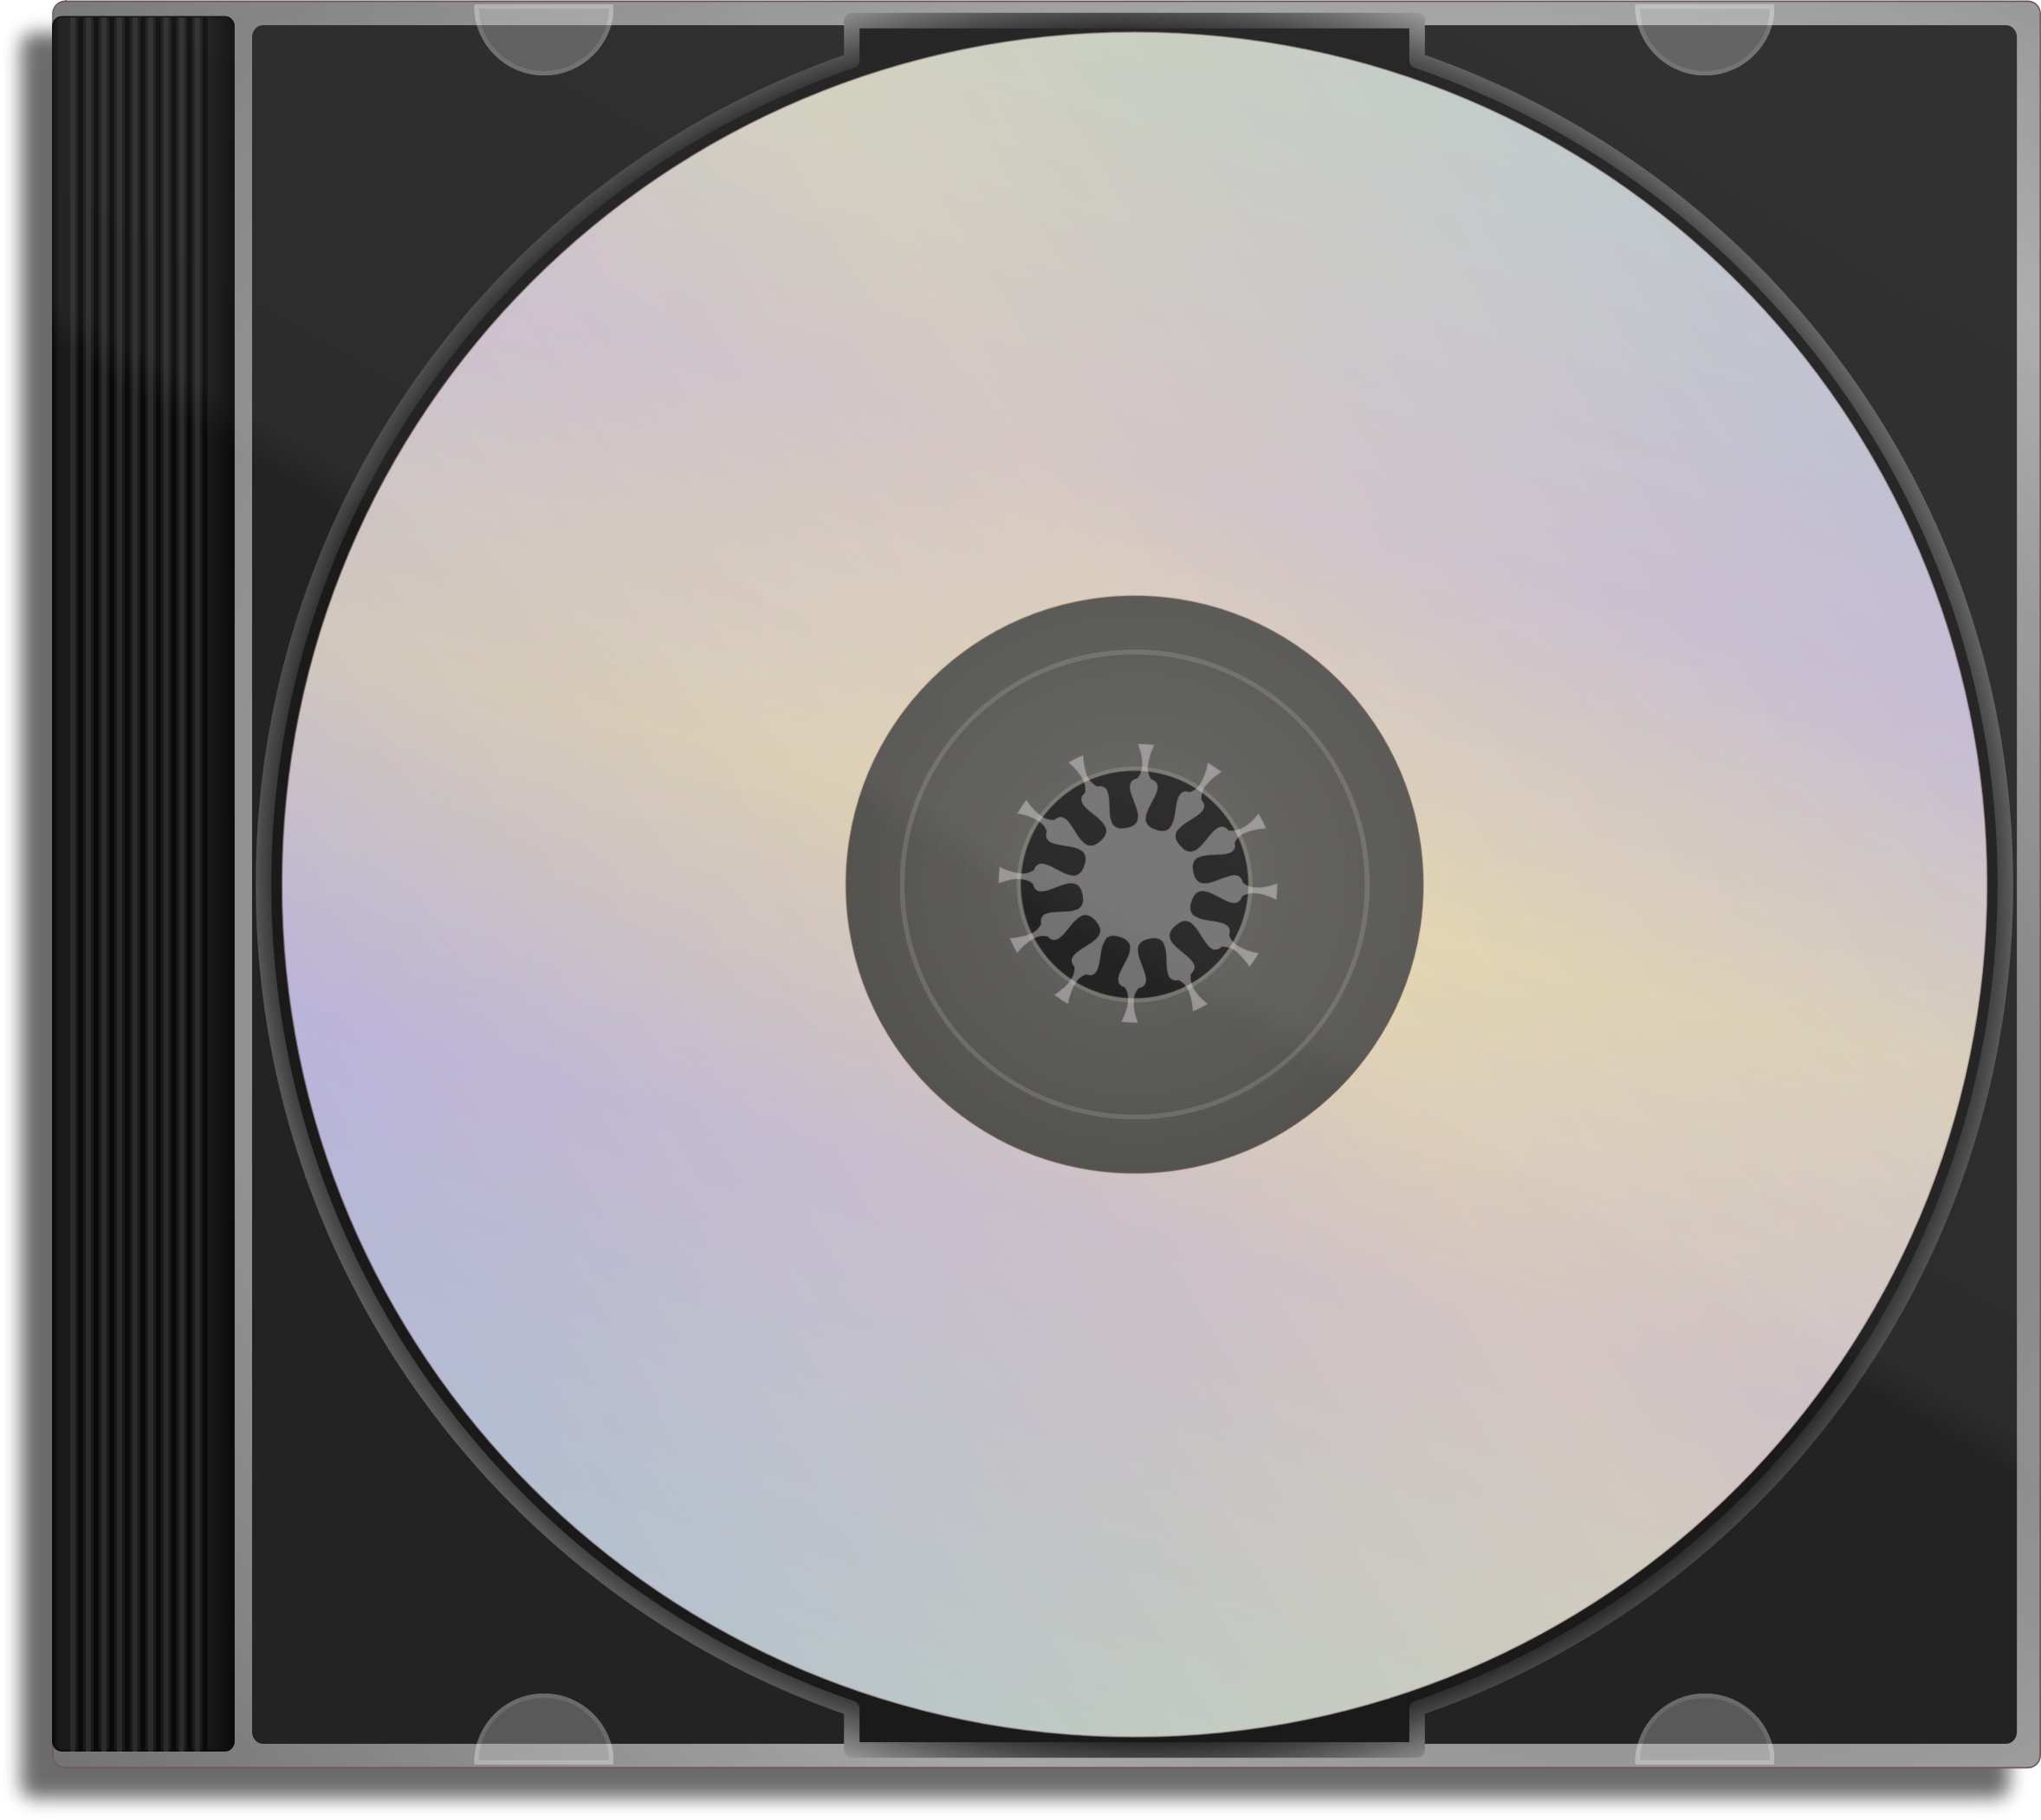 CD - Compact Disk (компакт диск). CD-ROM (Compact Disk ROM). 1 СД диск. CD диск в упаковке.